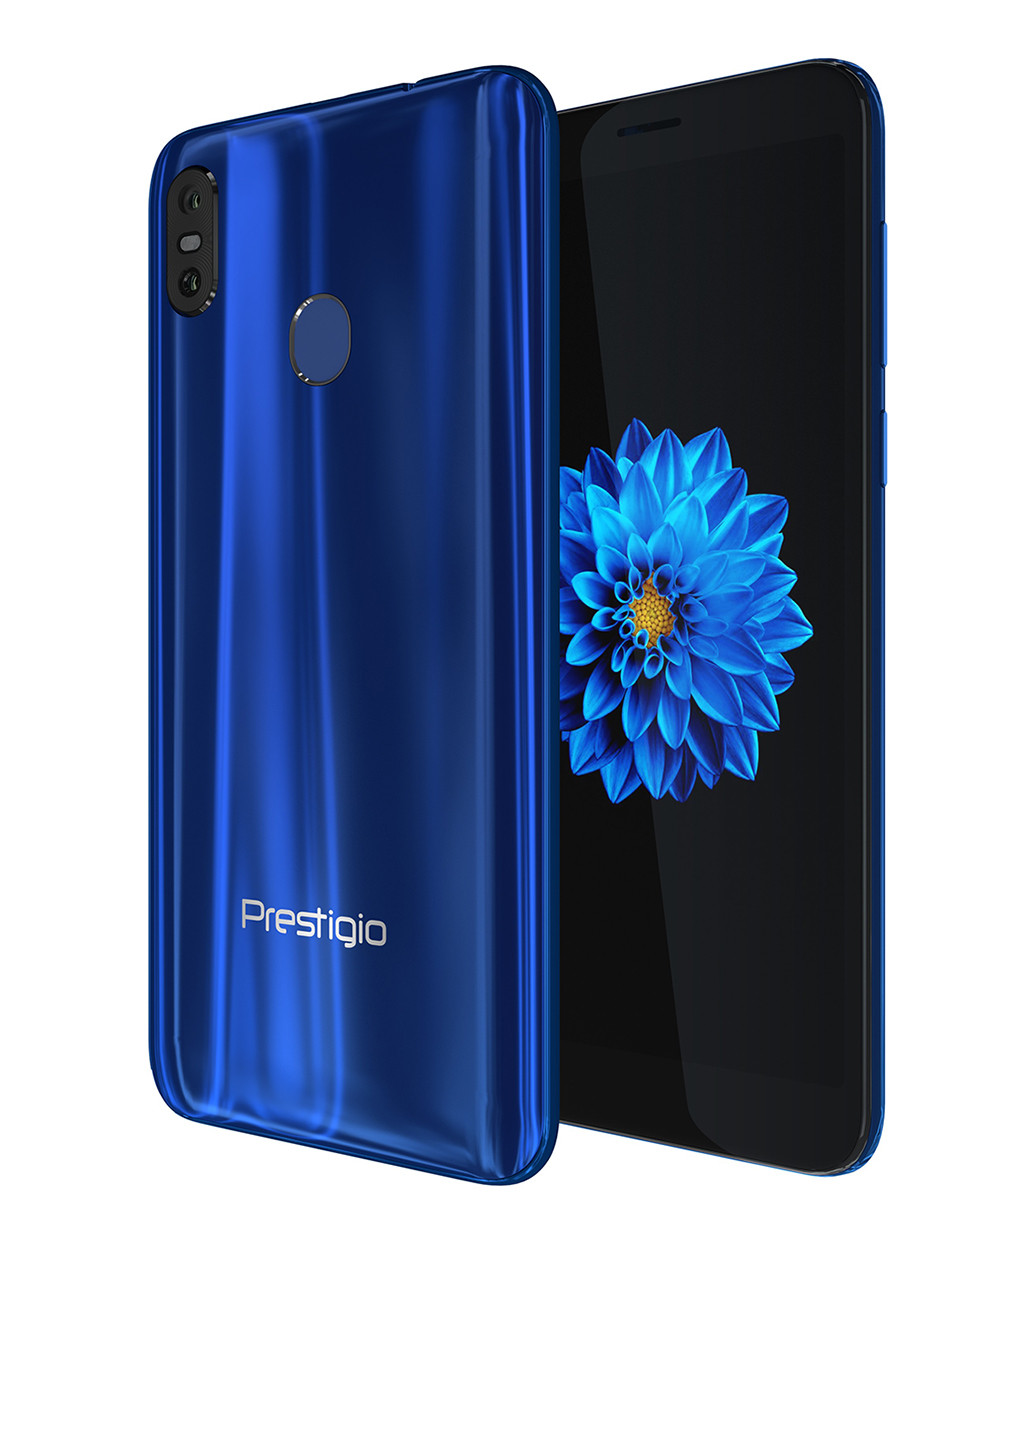 Смартфон X PRO 3 / 16GB Blue (PSP7546DUOBLUE) Prestigio x pro 3/16gb blue (psp7546duoblue) (130101643)